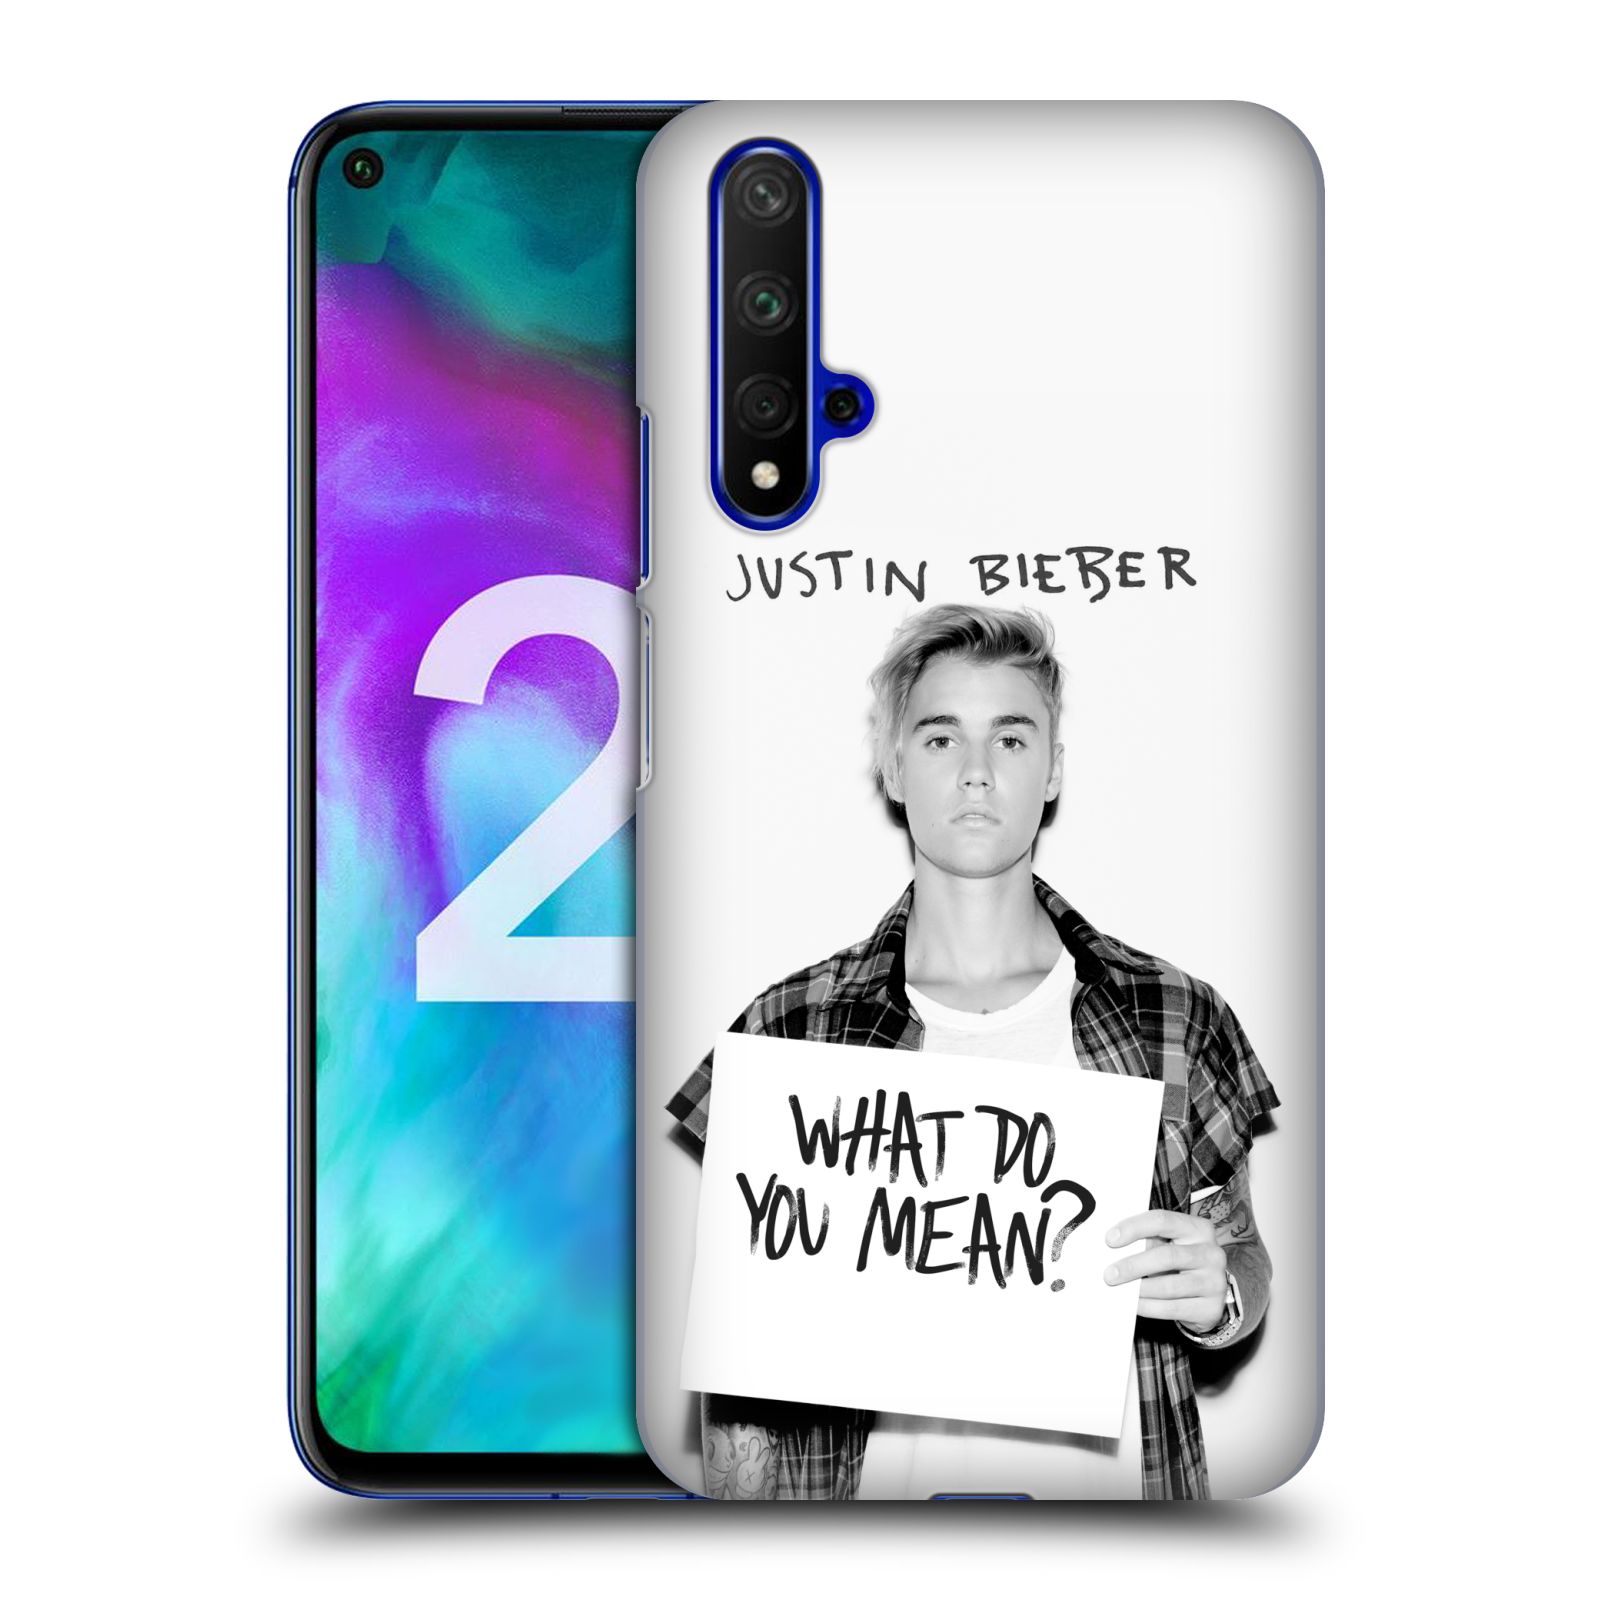 Pouzdro na mobil Honor 20 - HEAD CASE - Justin Bieber foto Purpose What do you mean